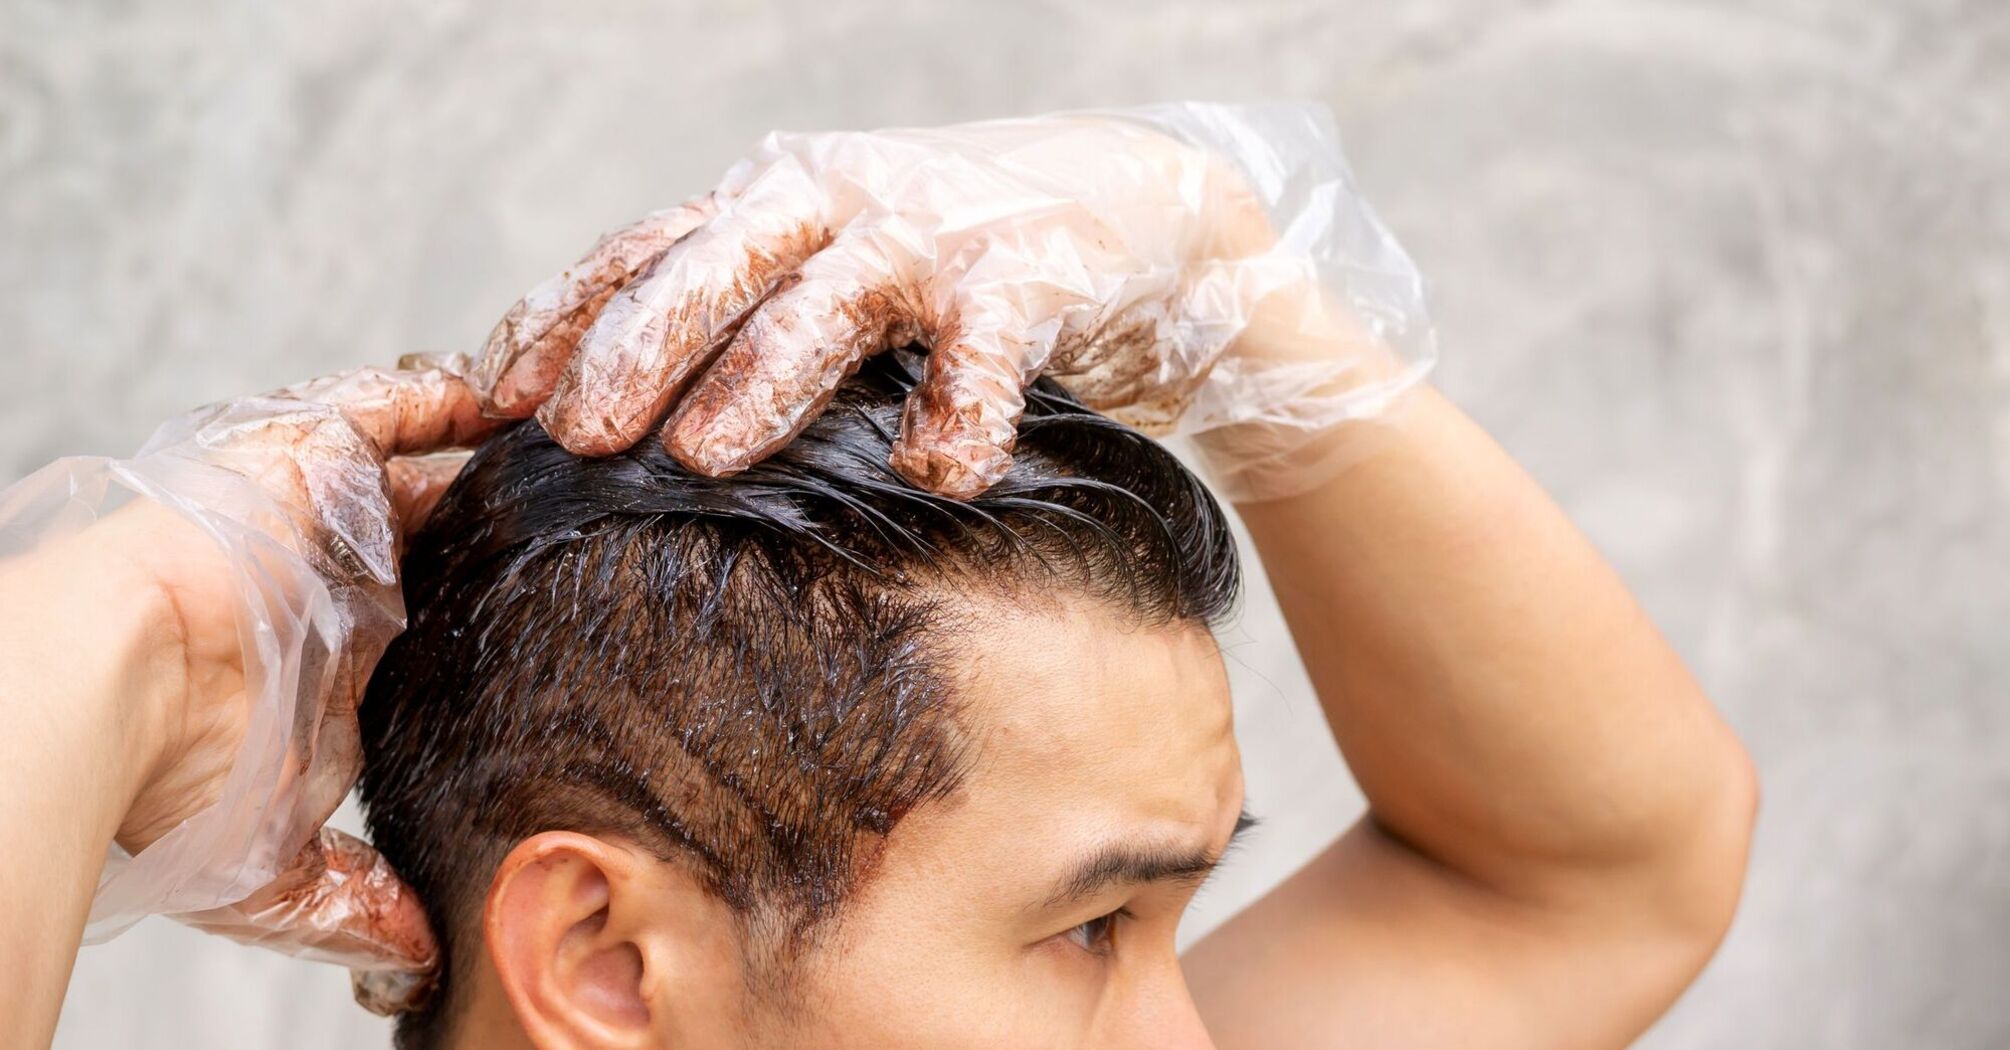 Hair dyeing for men